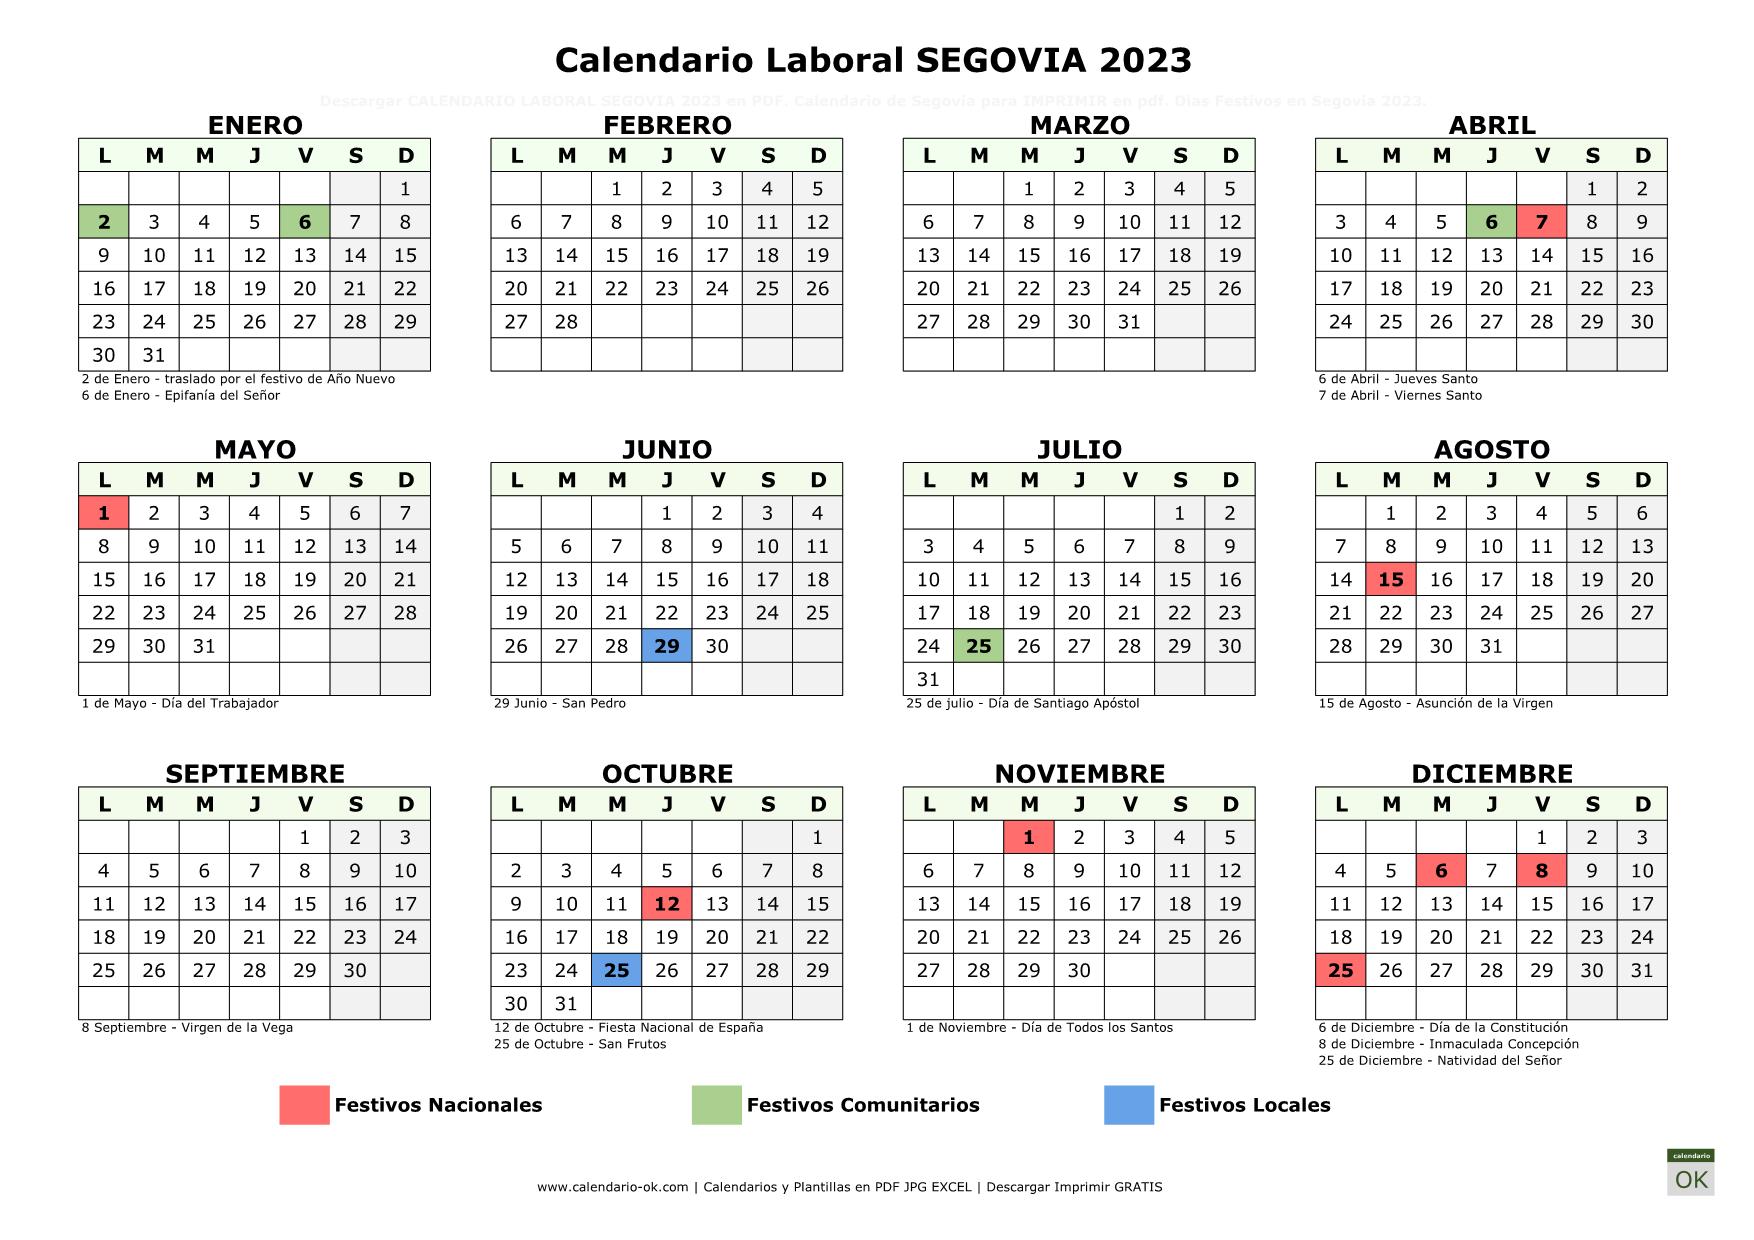 Calendario Laboral Segovia 2023 horizontal